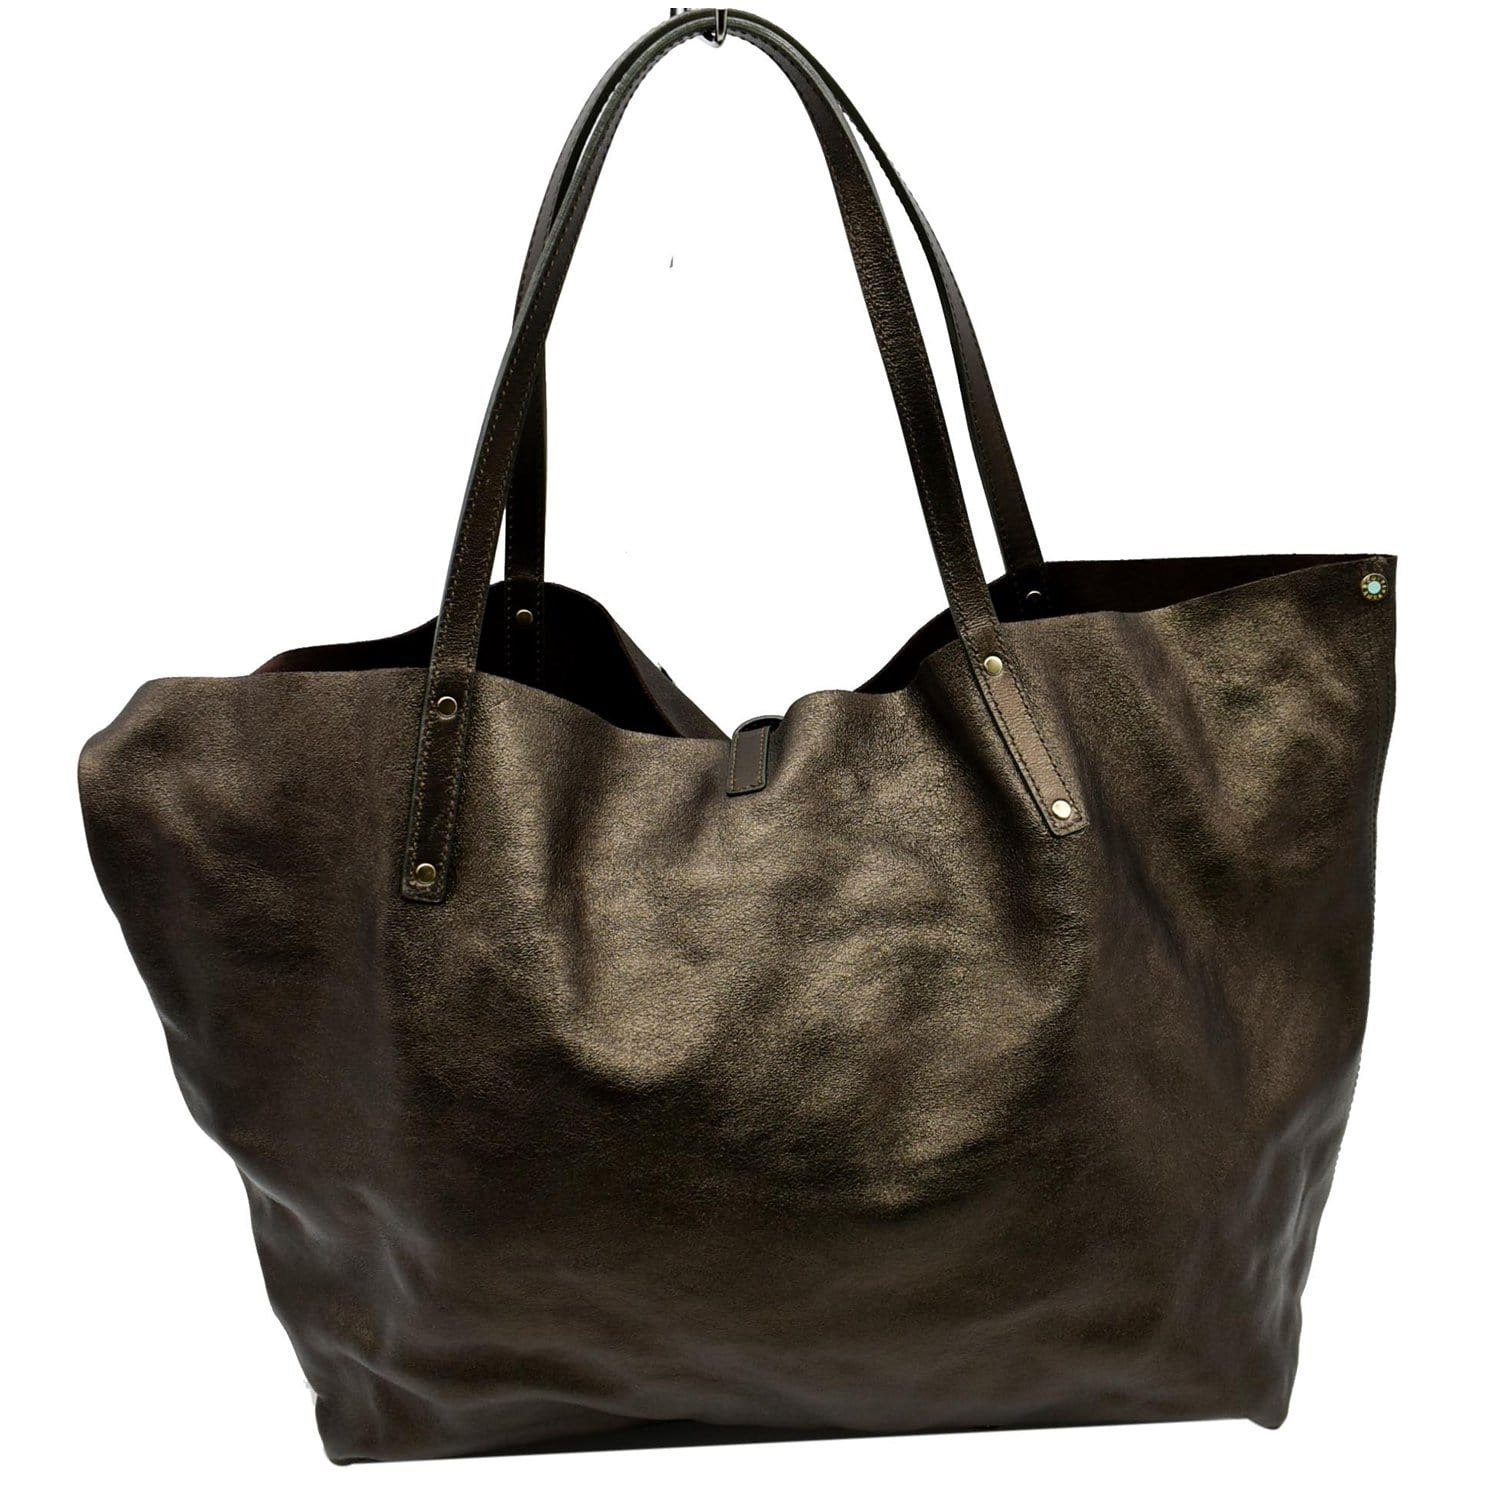 Tiffany & Co. Leather Exterior Medium Bags & Handbags for Women